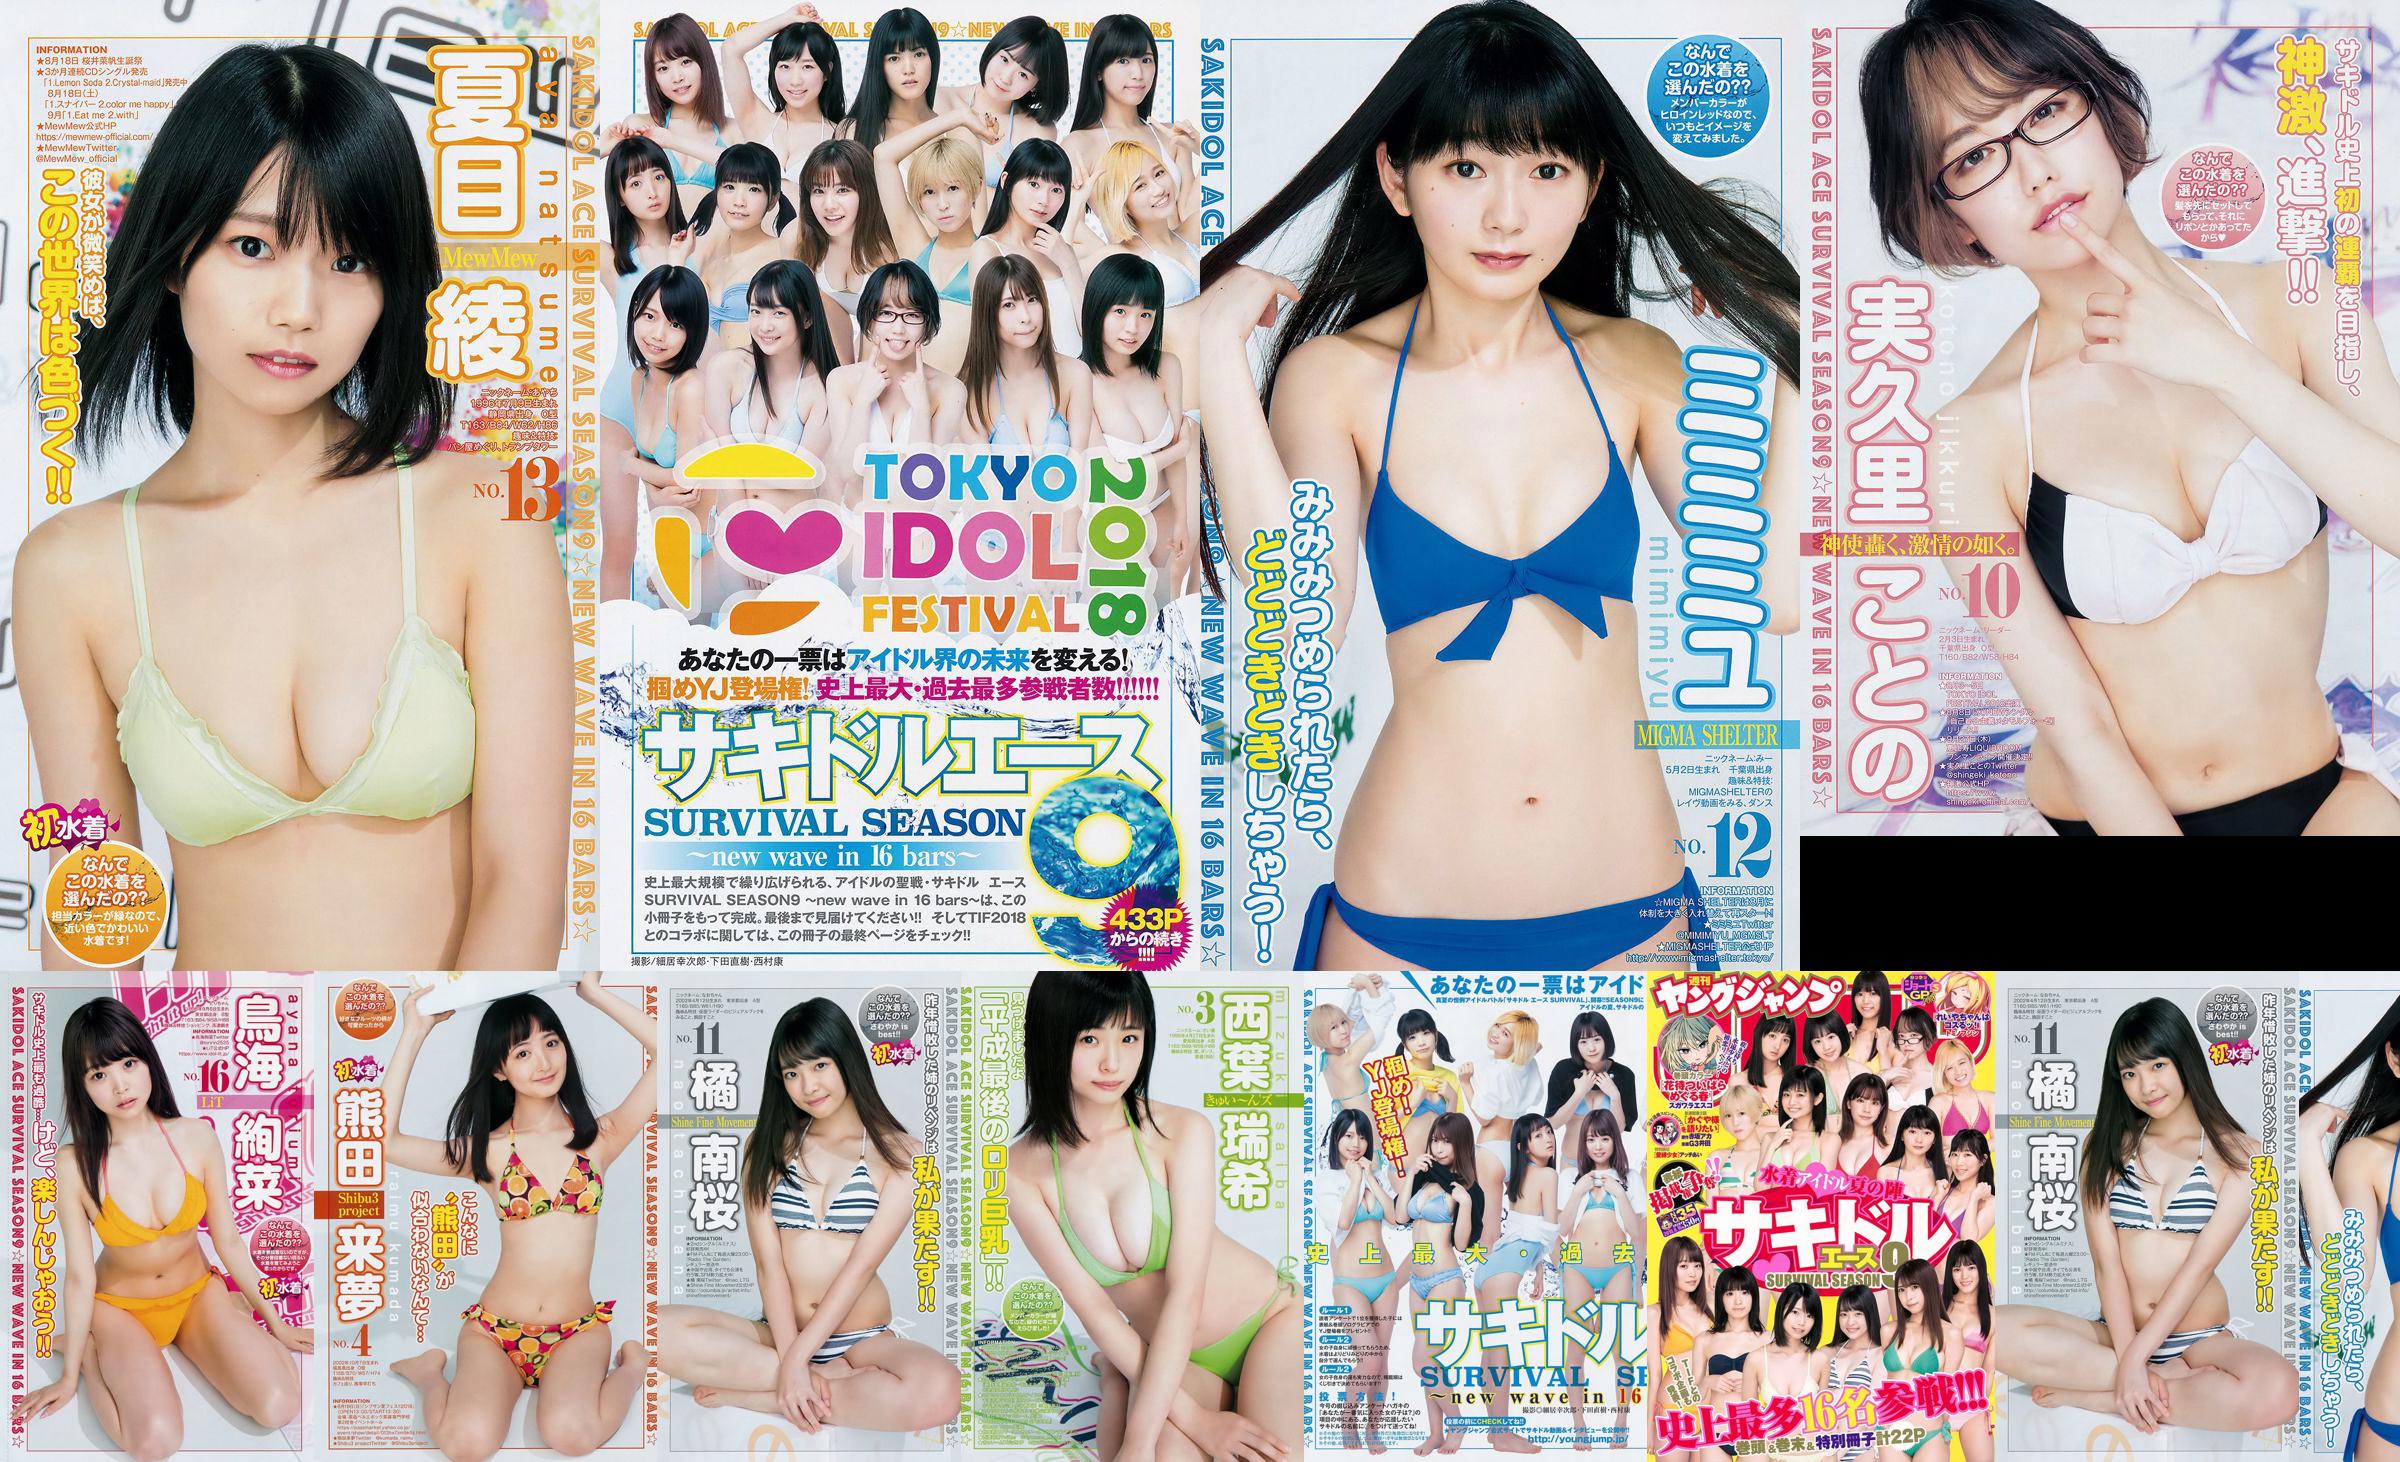 [FLASH] Ikumi Hisamatsu Risa Hirako Ren Ishikawa Angel Moe AKB48 Kaho Shibuya Misuzu Hayashi Ririka 2015.04.21 รูปภาพ Toshi No.ca7875 หน้า 4